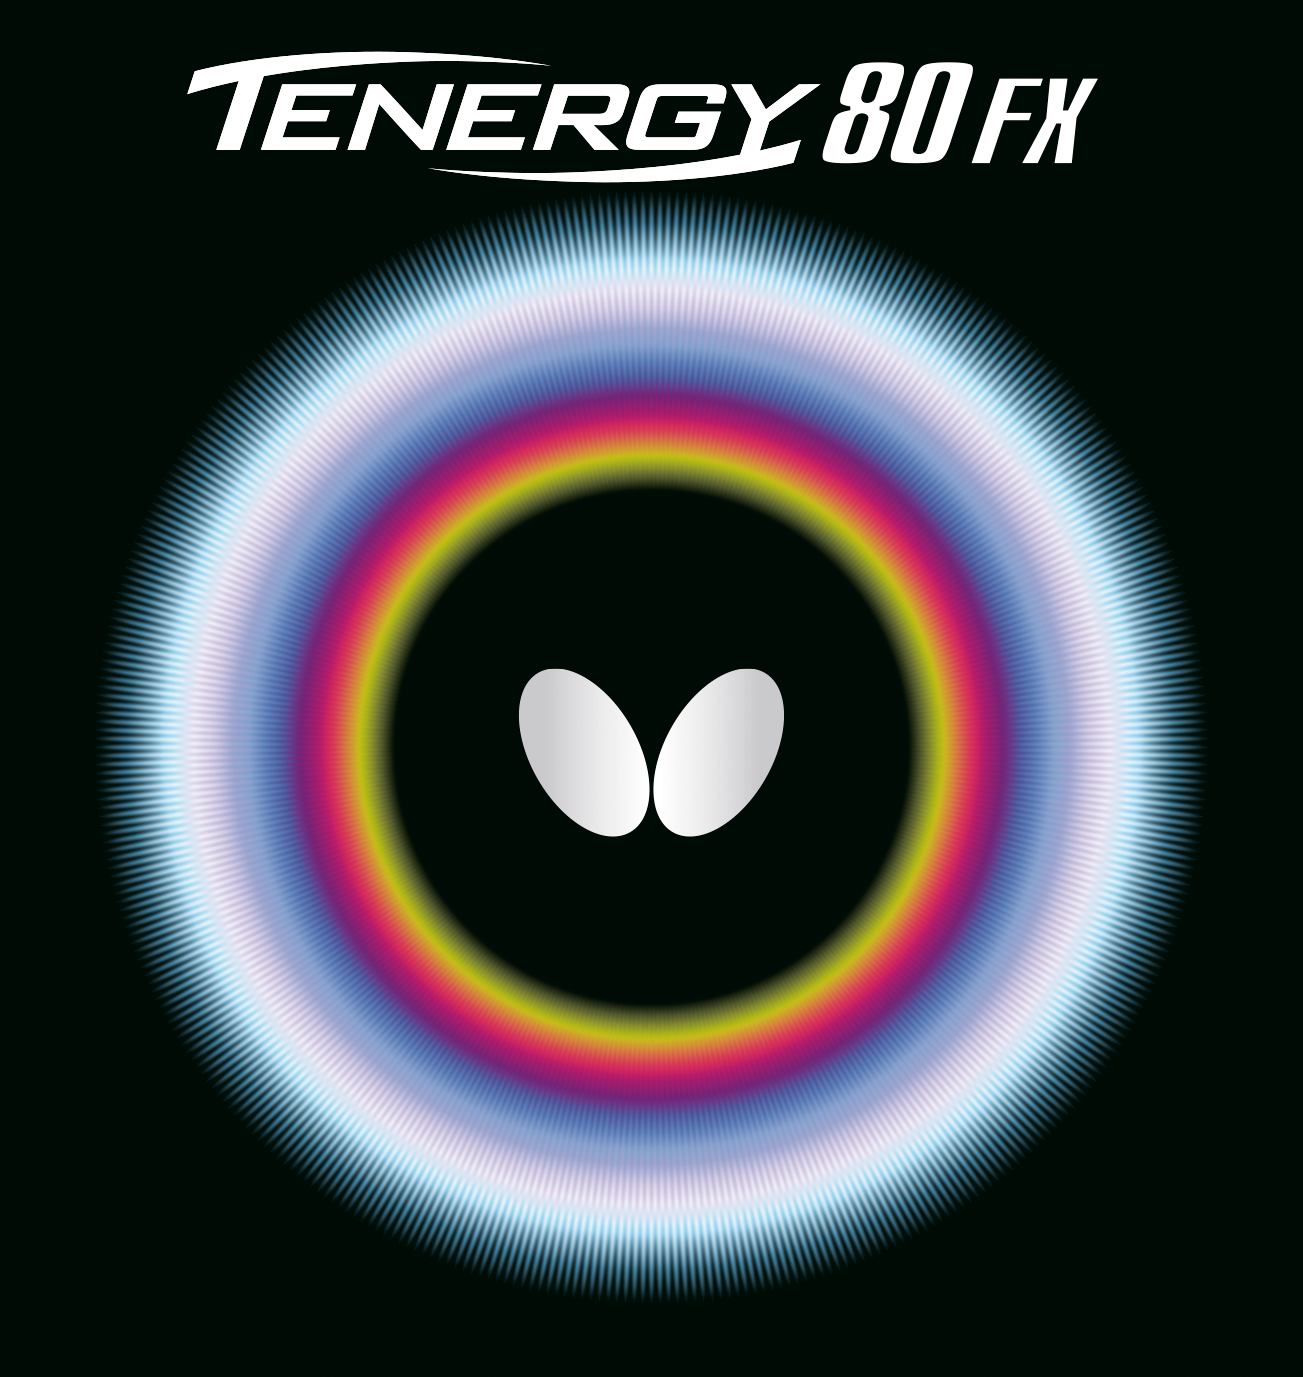 BUTTERFLY - rubber Tenergy 80 fx